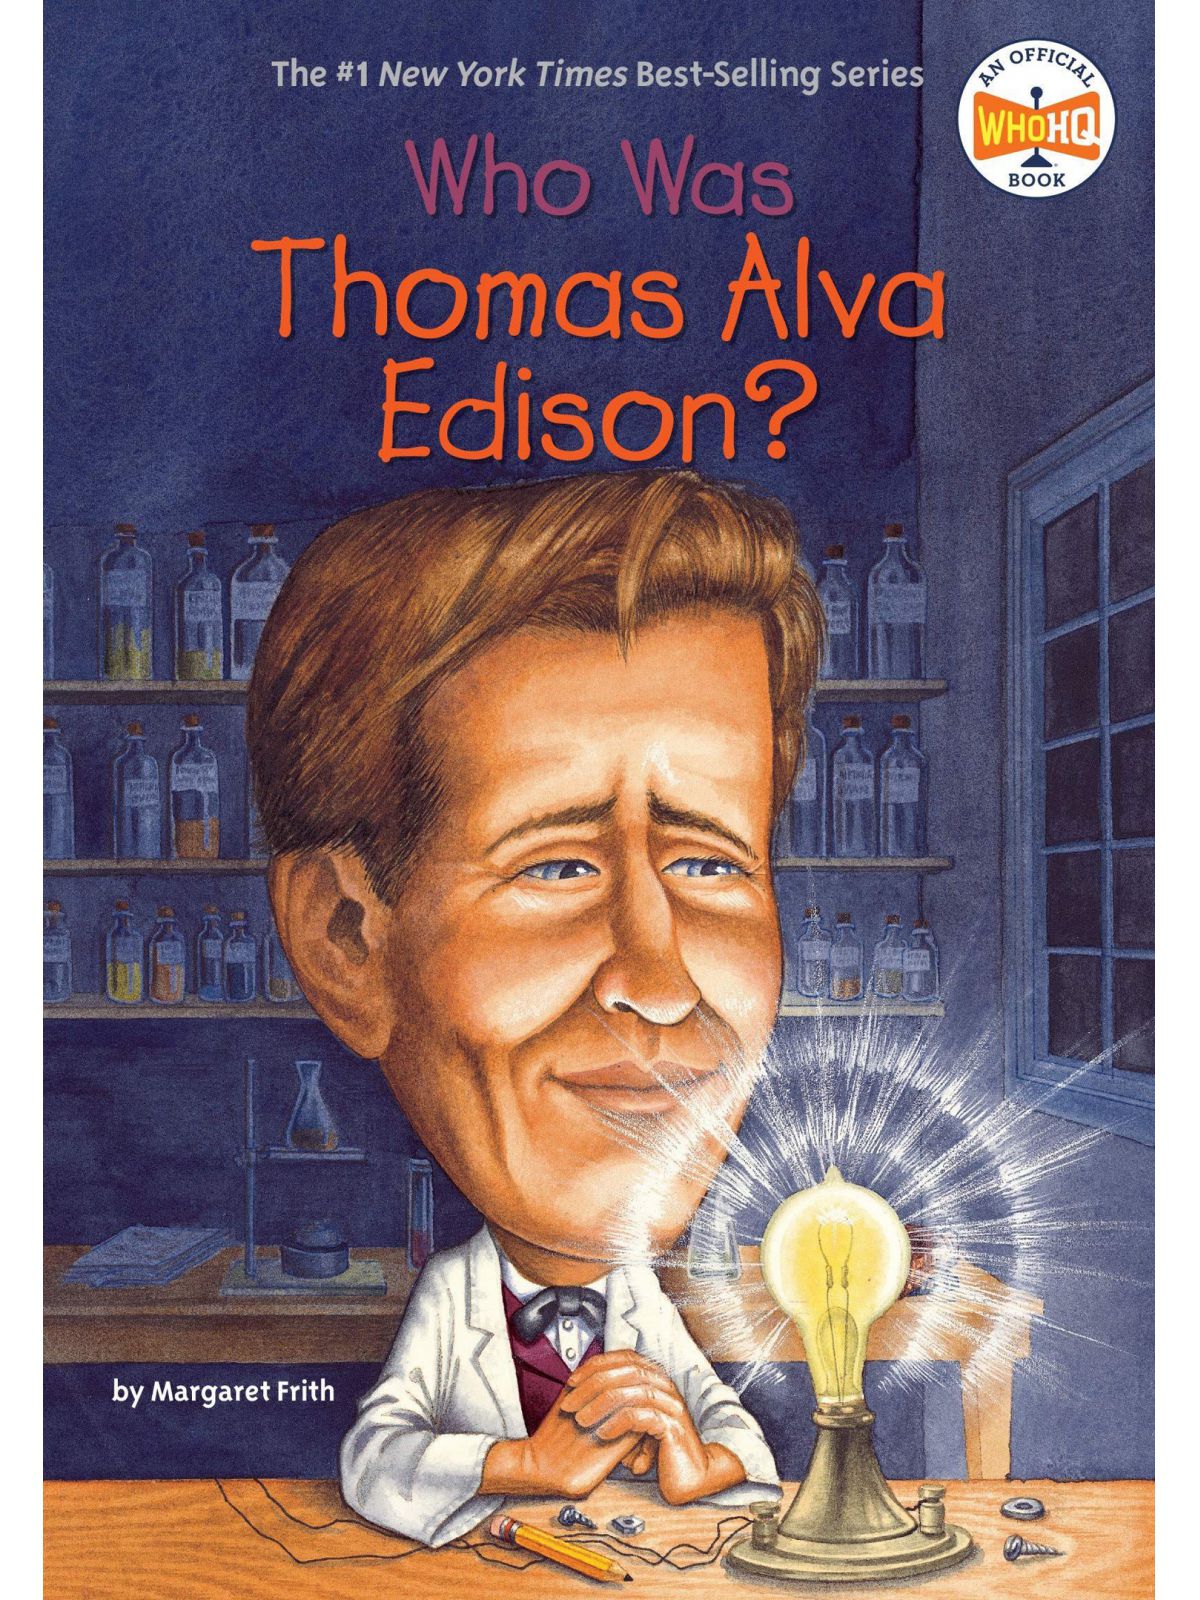 WHO WAS THOMAS ALVA EDISON?